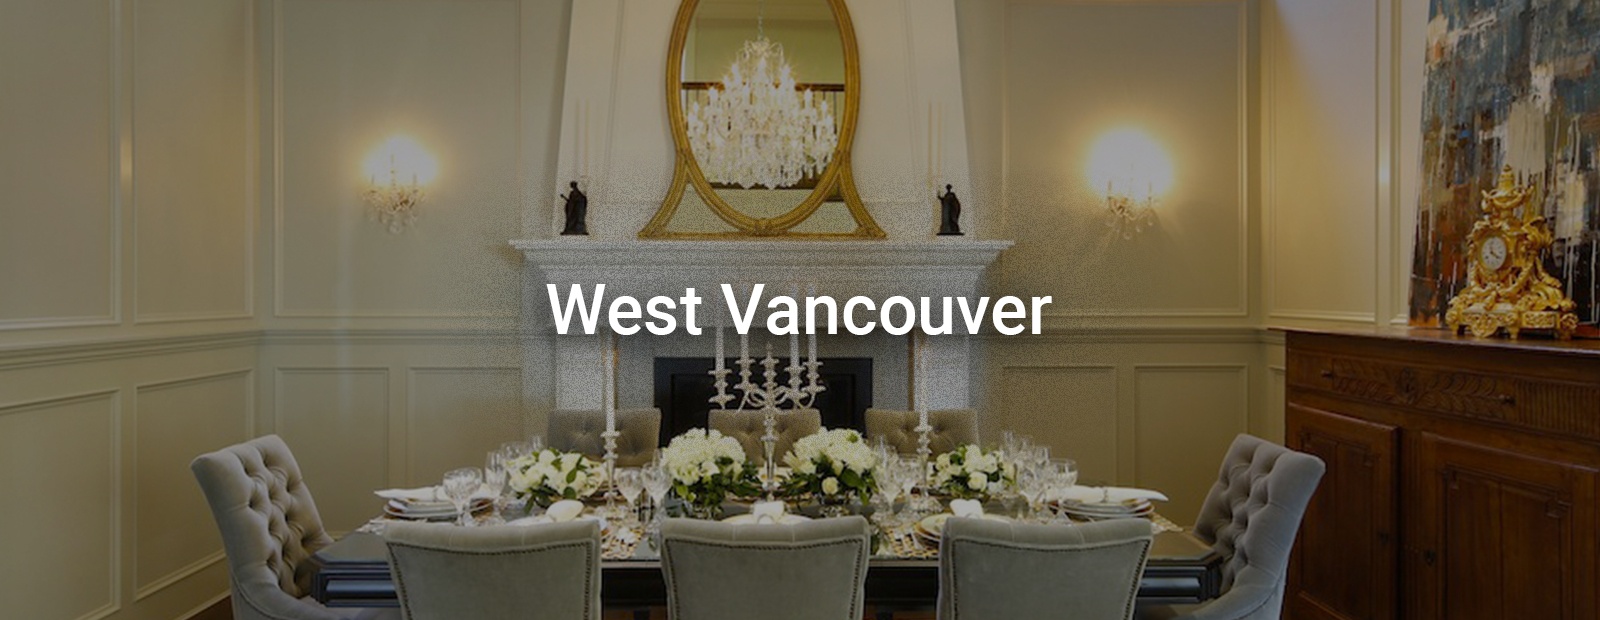 West Vancouver - Interior Design Company Vancouver